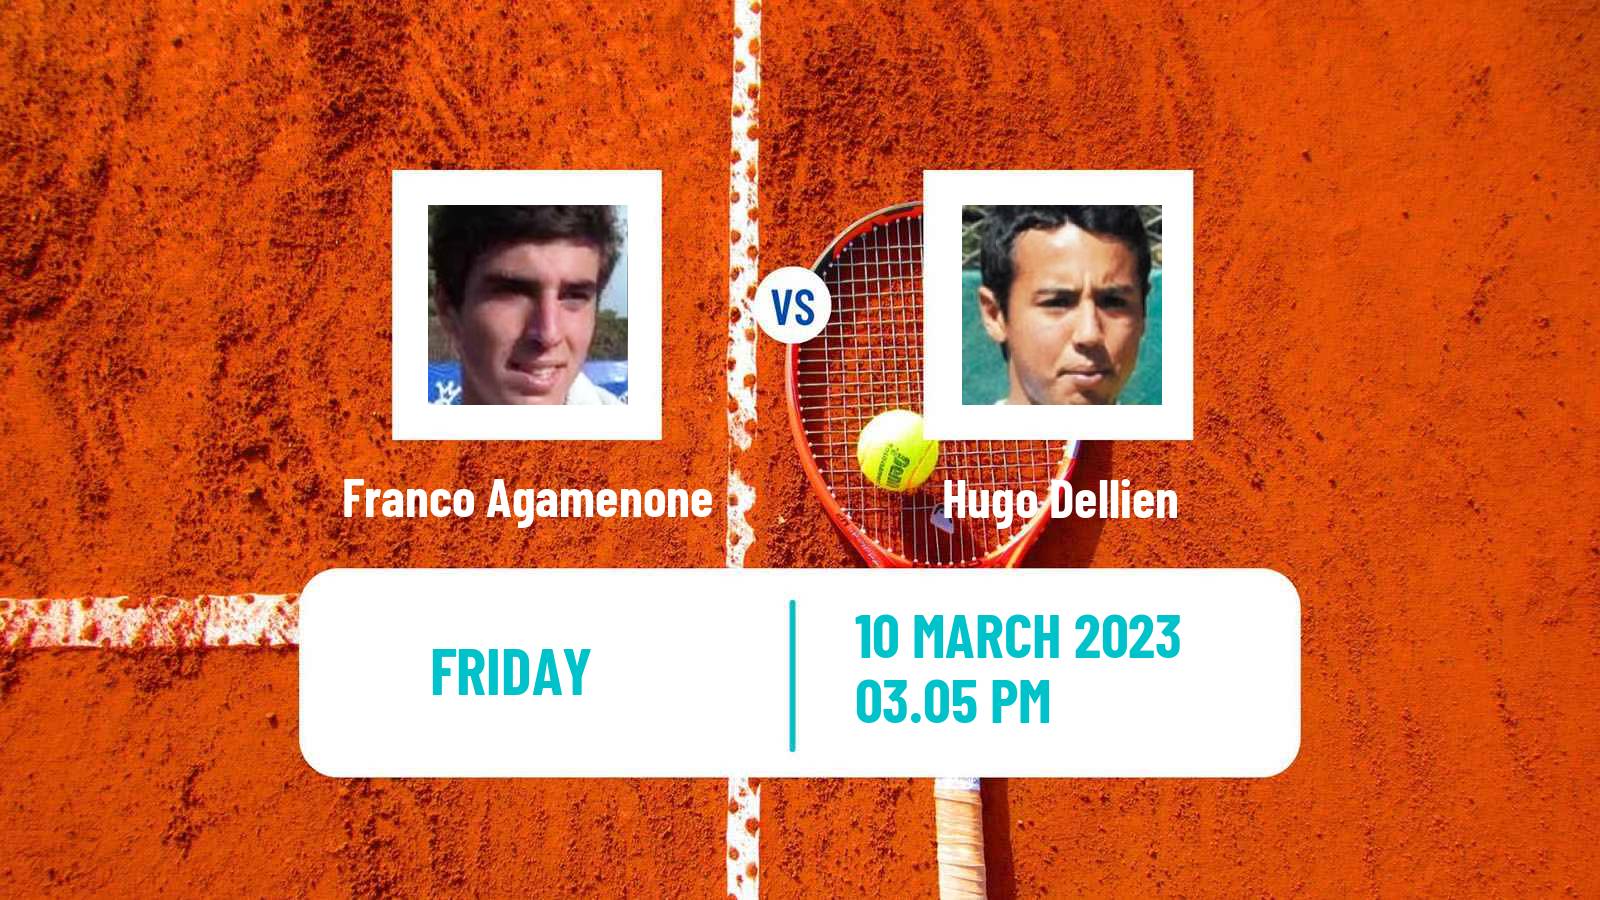 Tennis ATP Challenger Franco Agamenone - Hugo Dellien